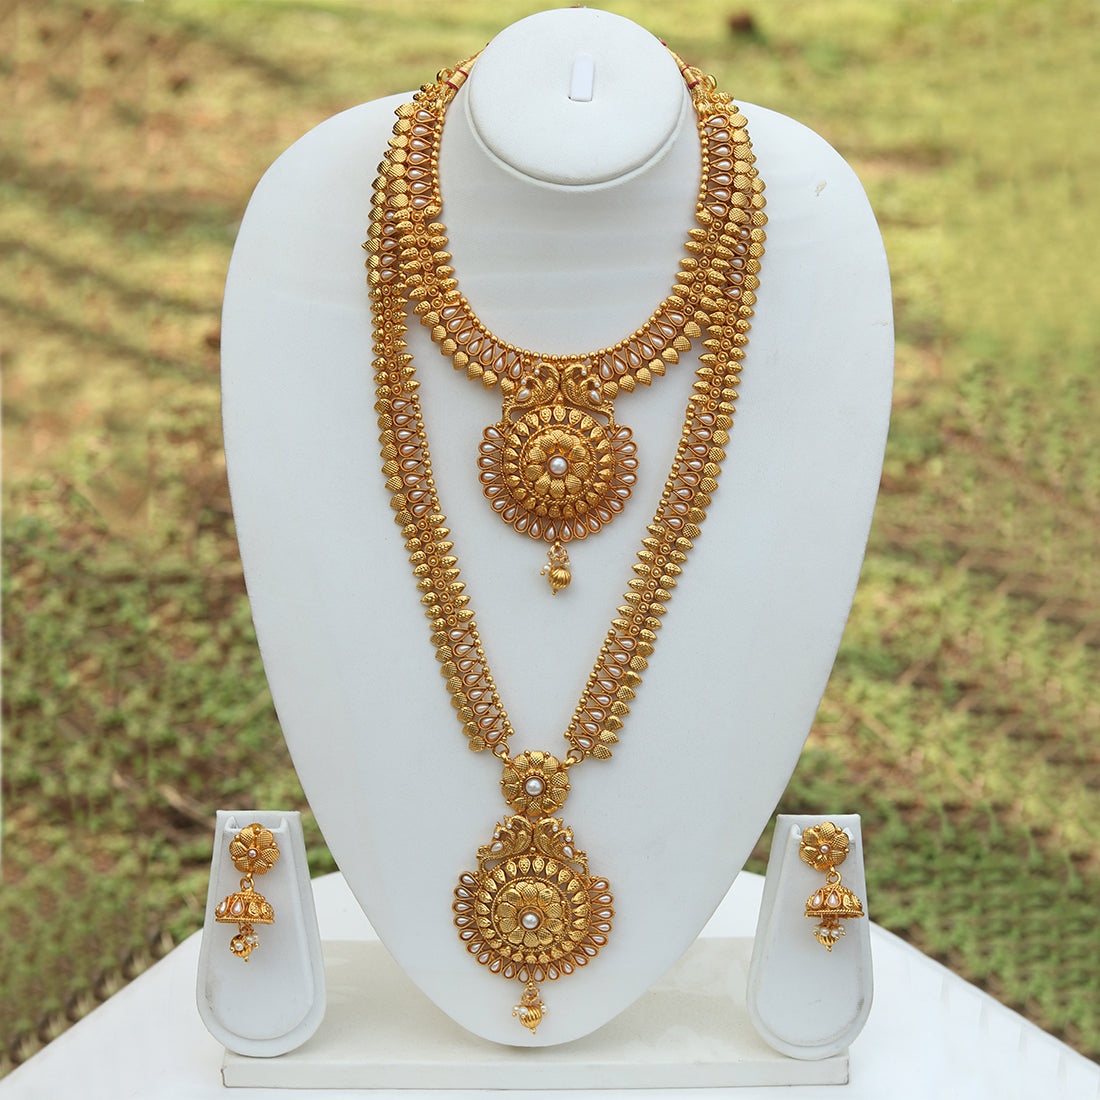 Amazing Bridal Look Gold Plated Long Haram Wedding Necklace with Jhumki Earring Set